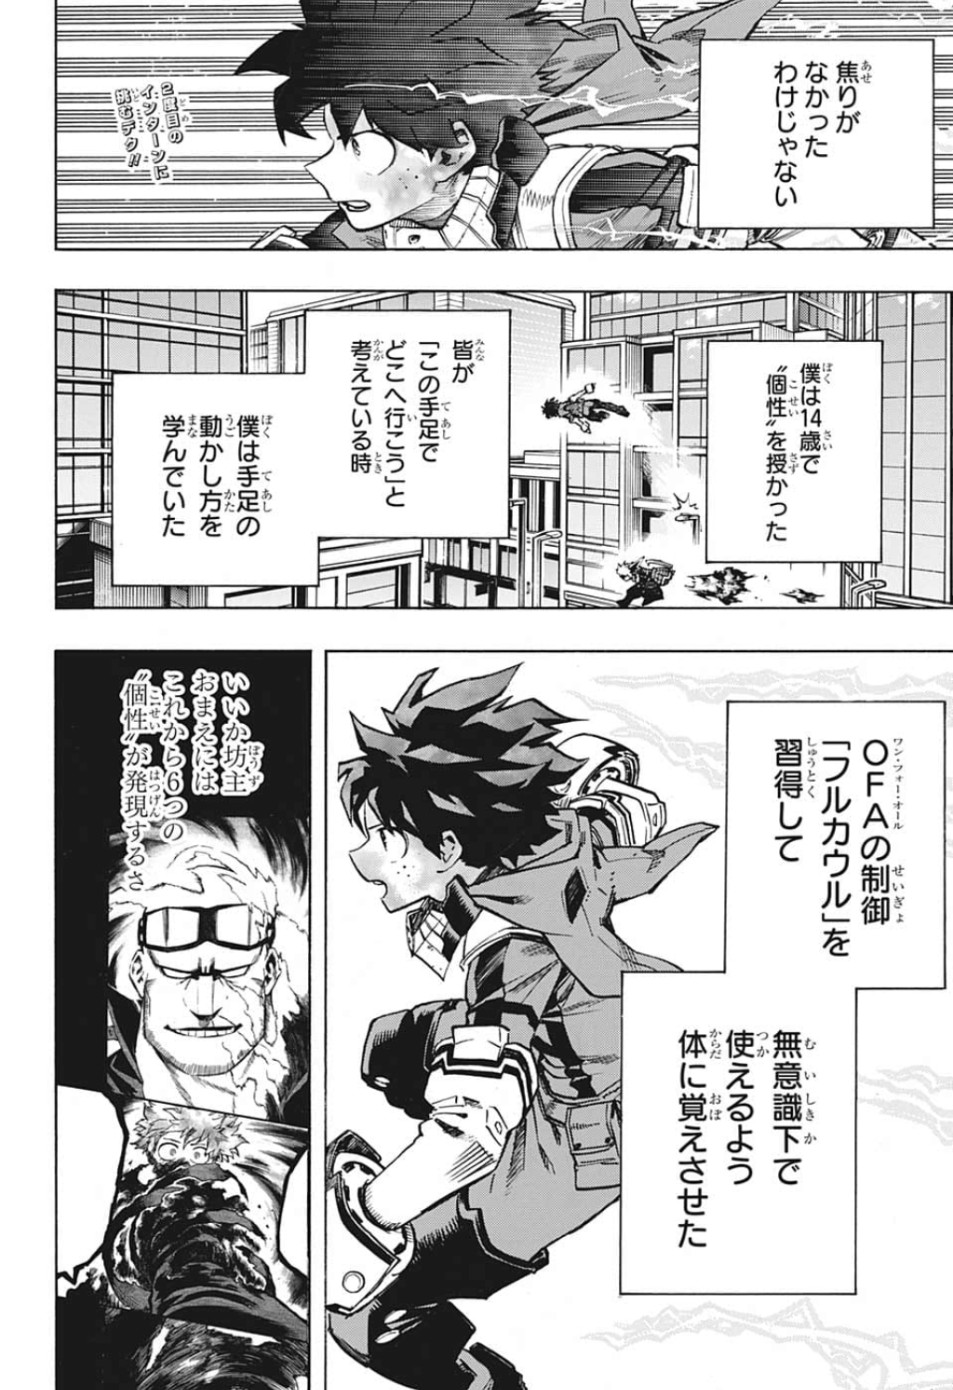 Boku no Hero Academia - Chapter 248 - Page 2